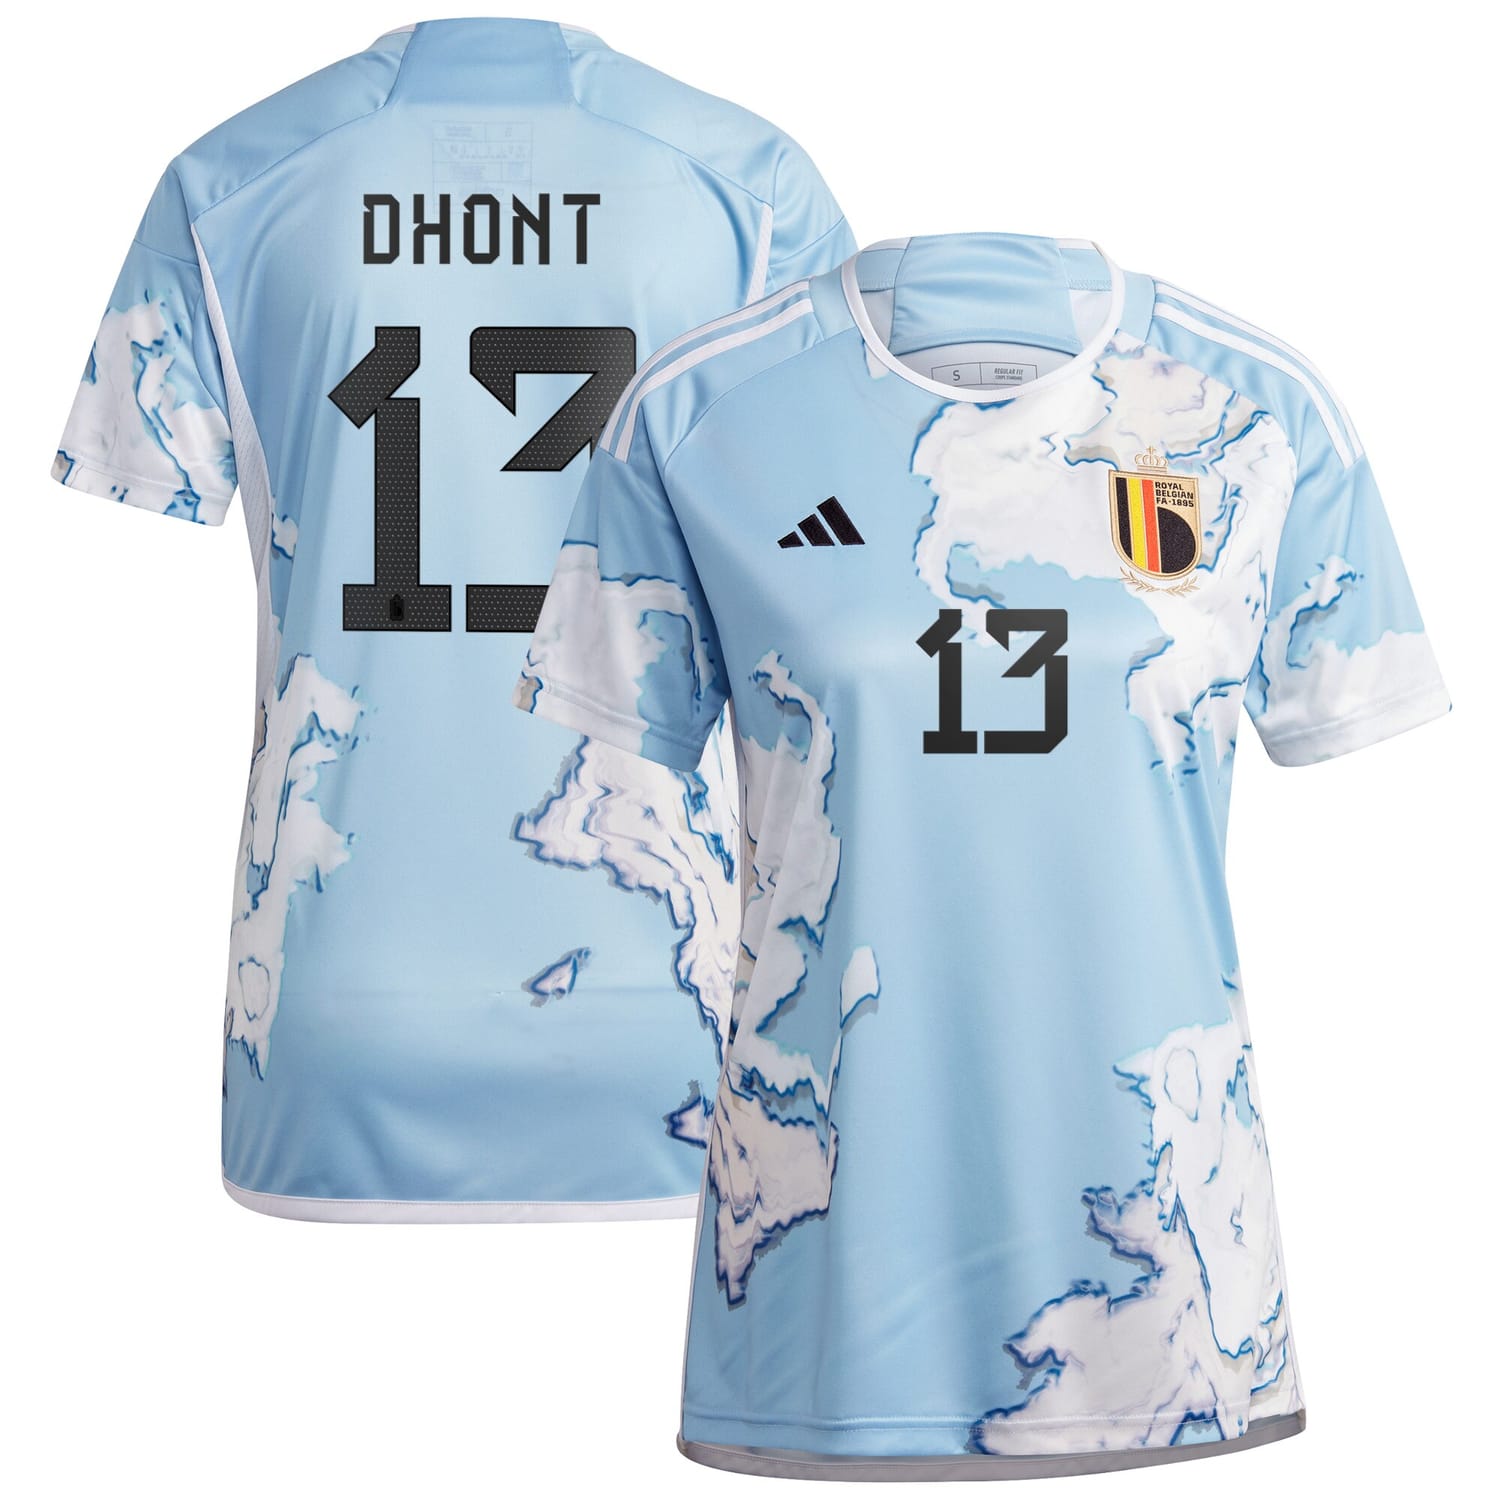 Belgium National Team Away Jersey Shirt 2023 player Elena Dhont 13 printing for Women